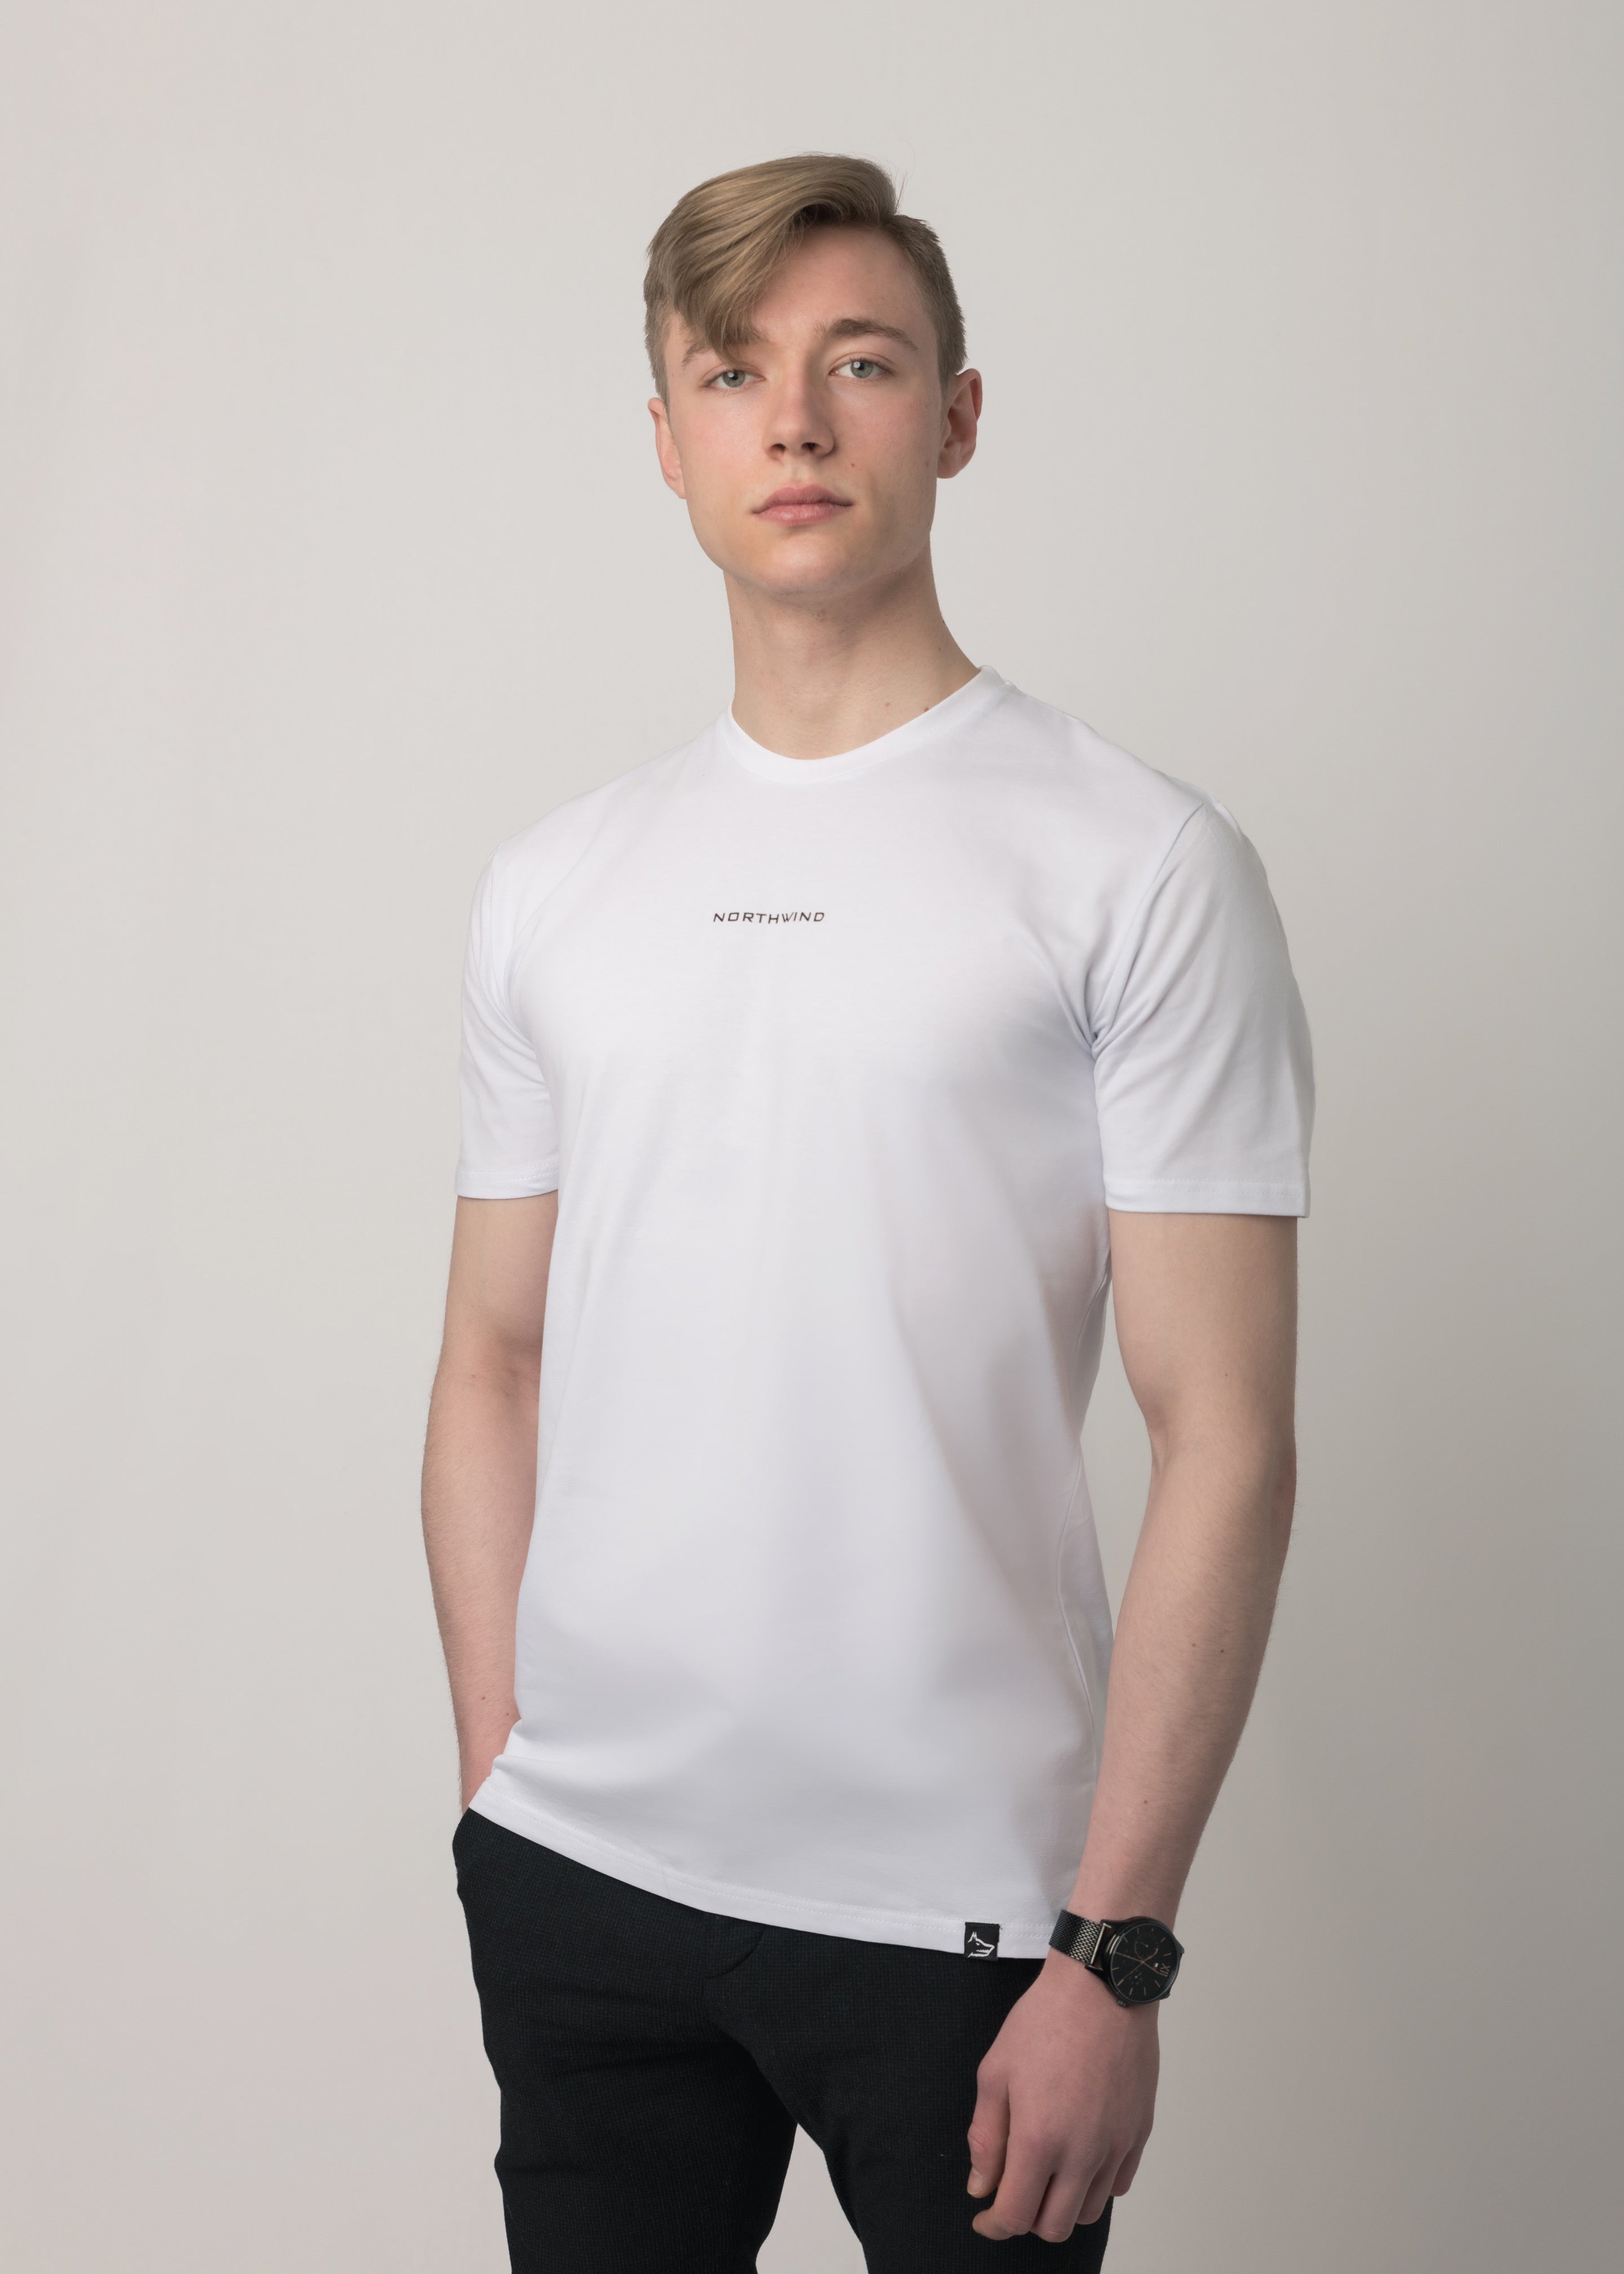 Slim-Fit Signature White T-shirt